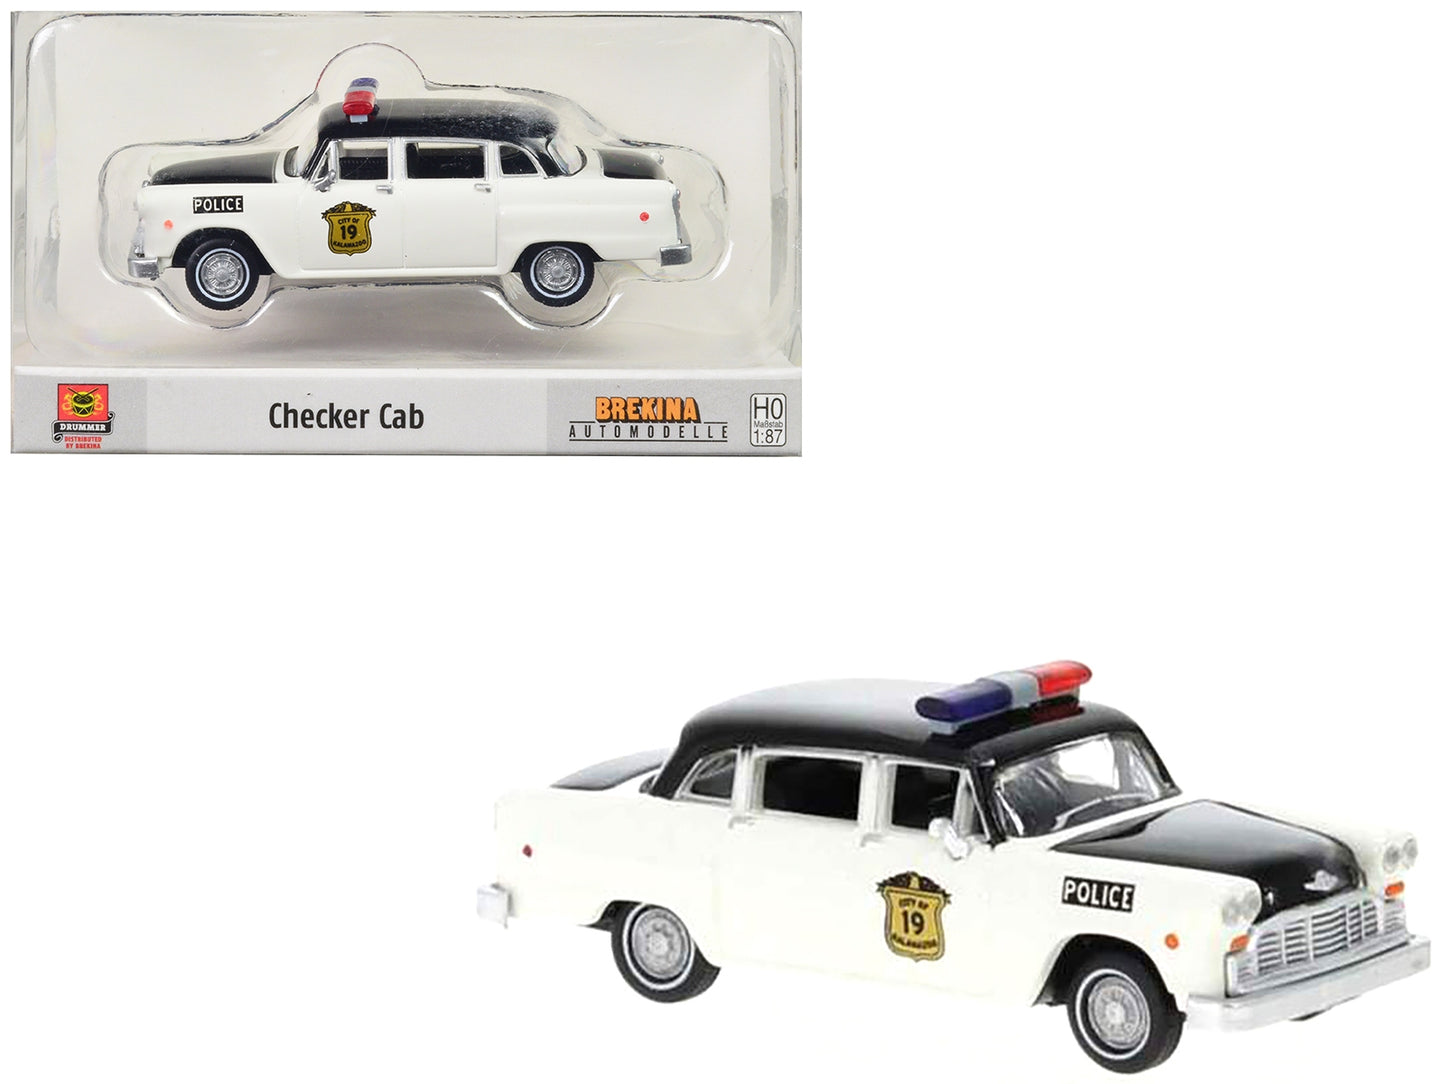 1974 Checker Cab Police White and Black "Kalamazoo Police" 1/87 (HO) Scale Model Car by Brekina